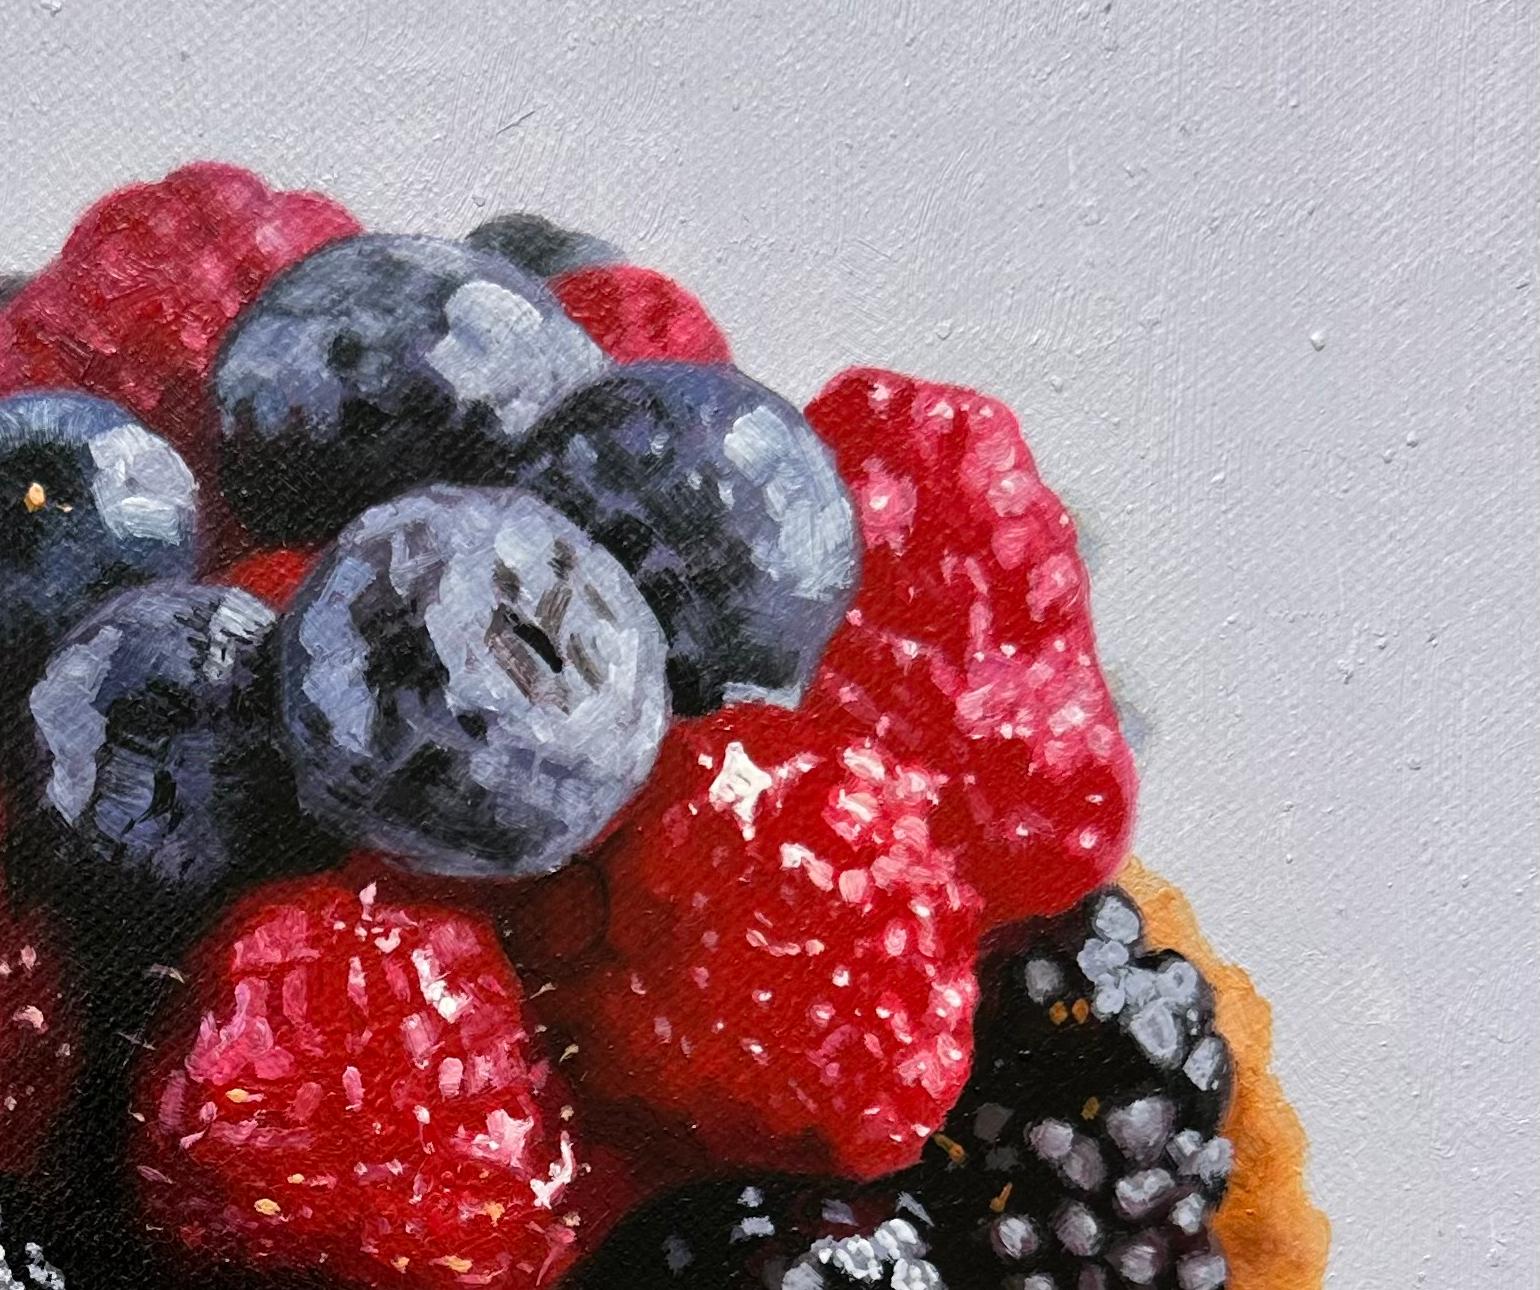 Blackberry, Himbeer-, Himbeer- und Blaubeerschale mit Haar – Painting von Marc Dennis